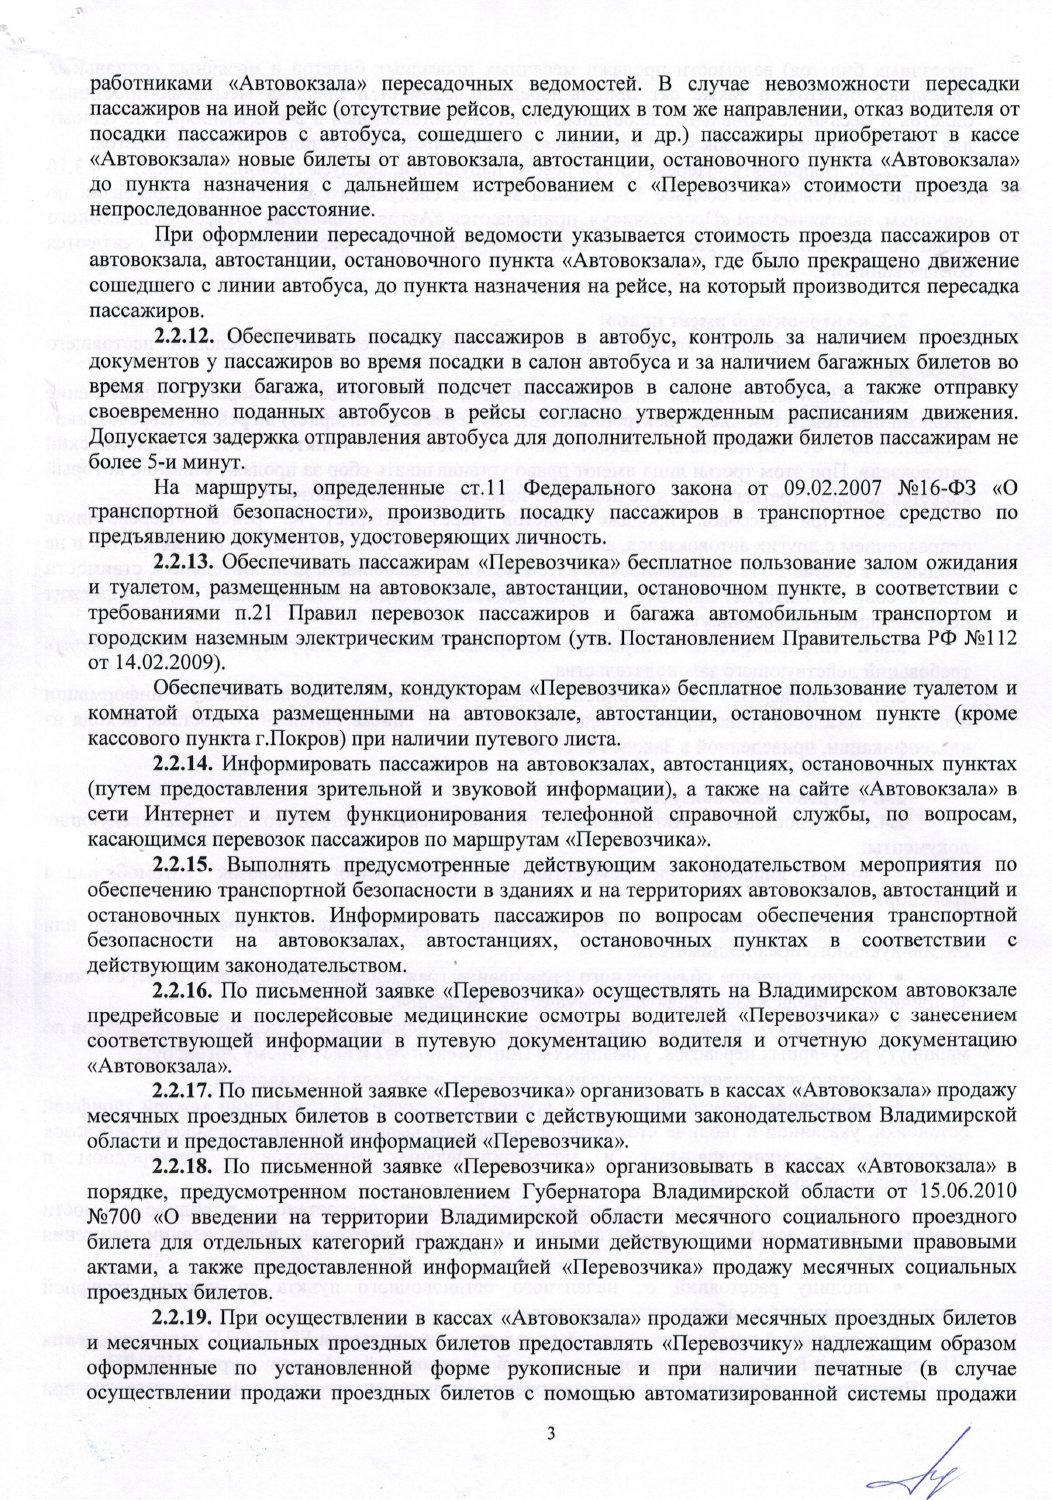 Договор ГУП владимиский вокзал-3.jpg